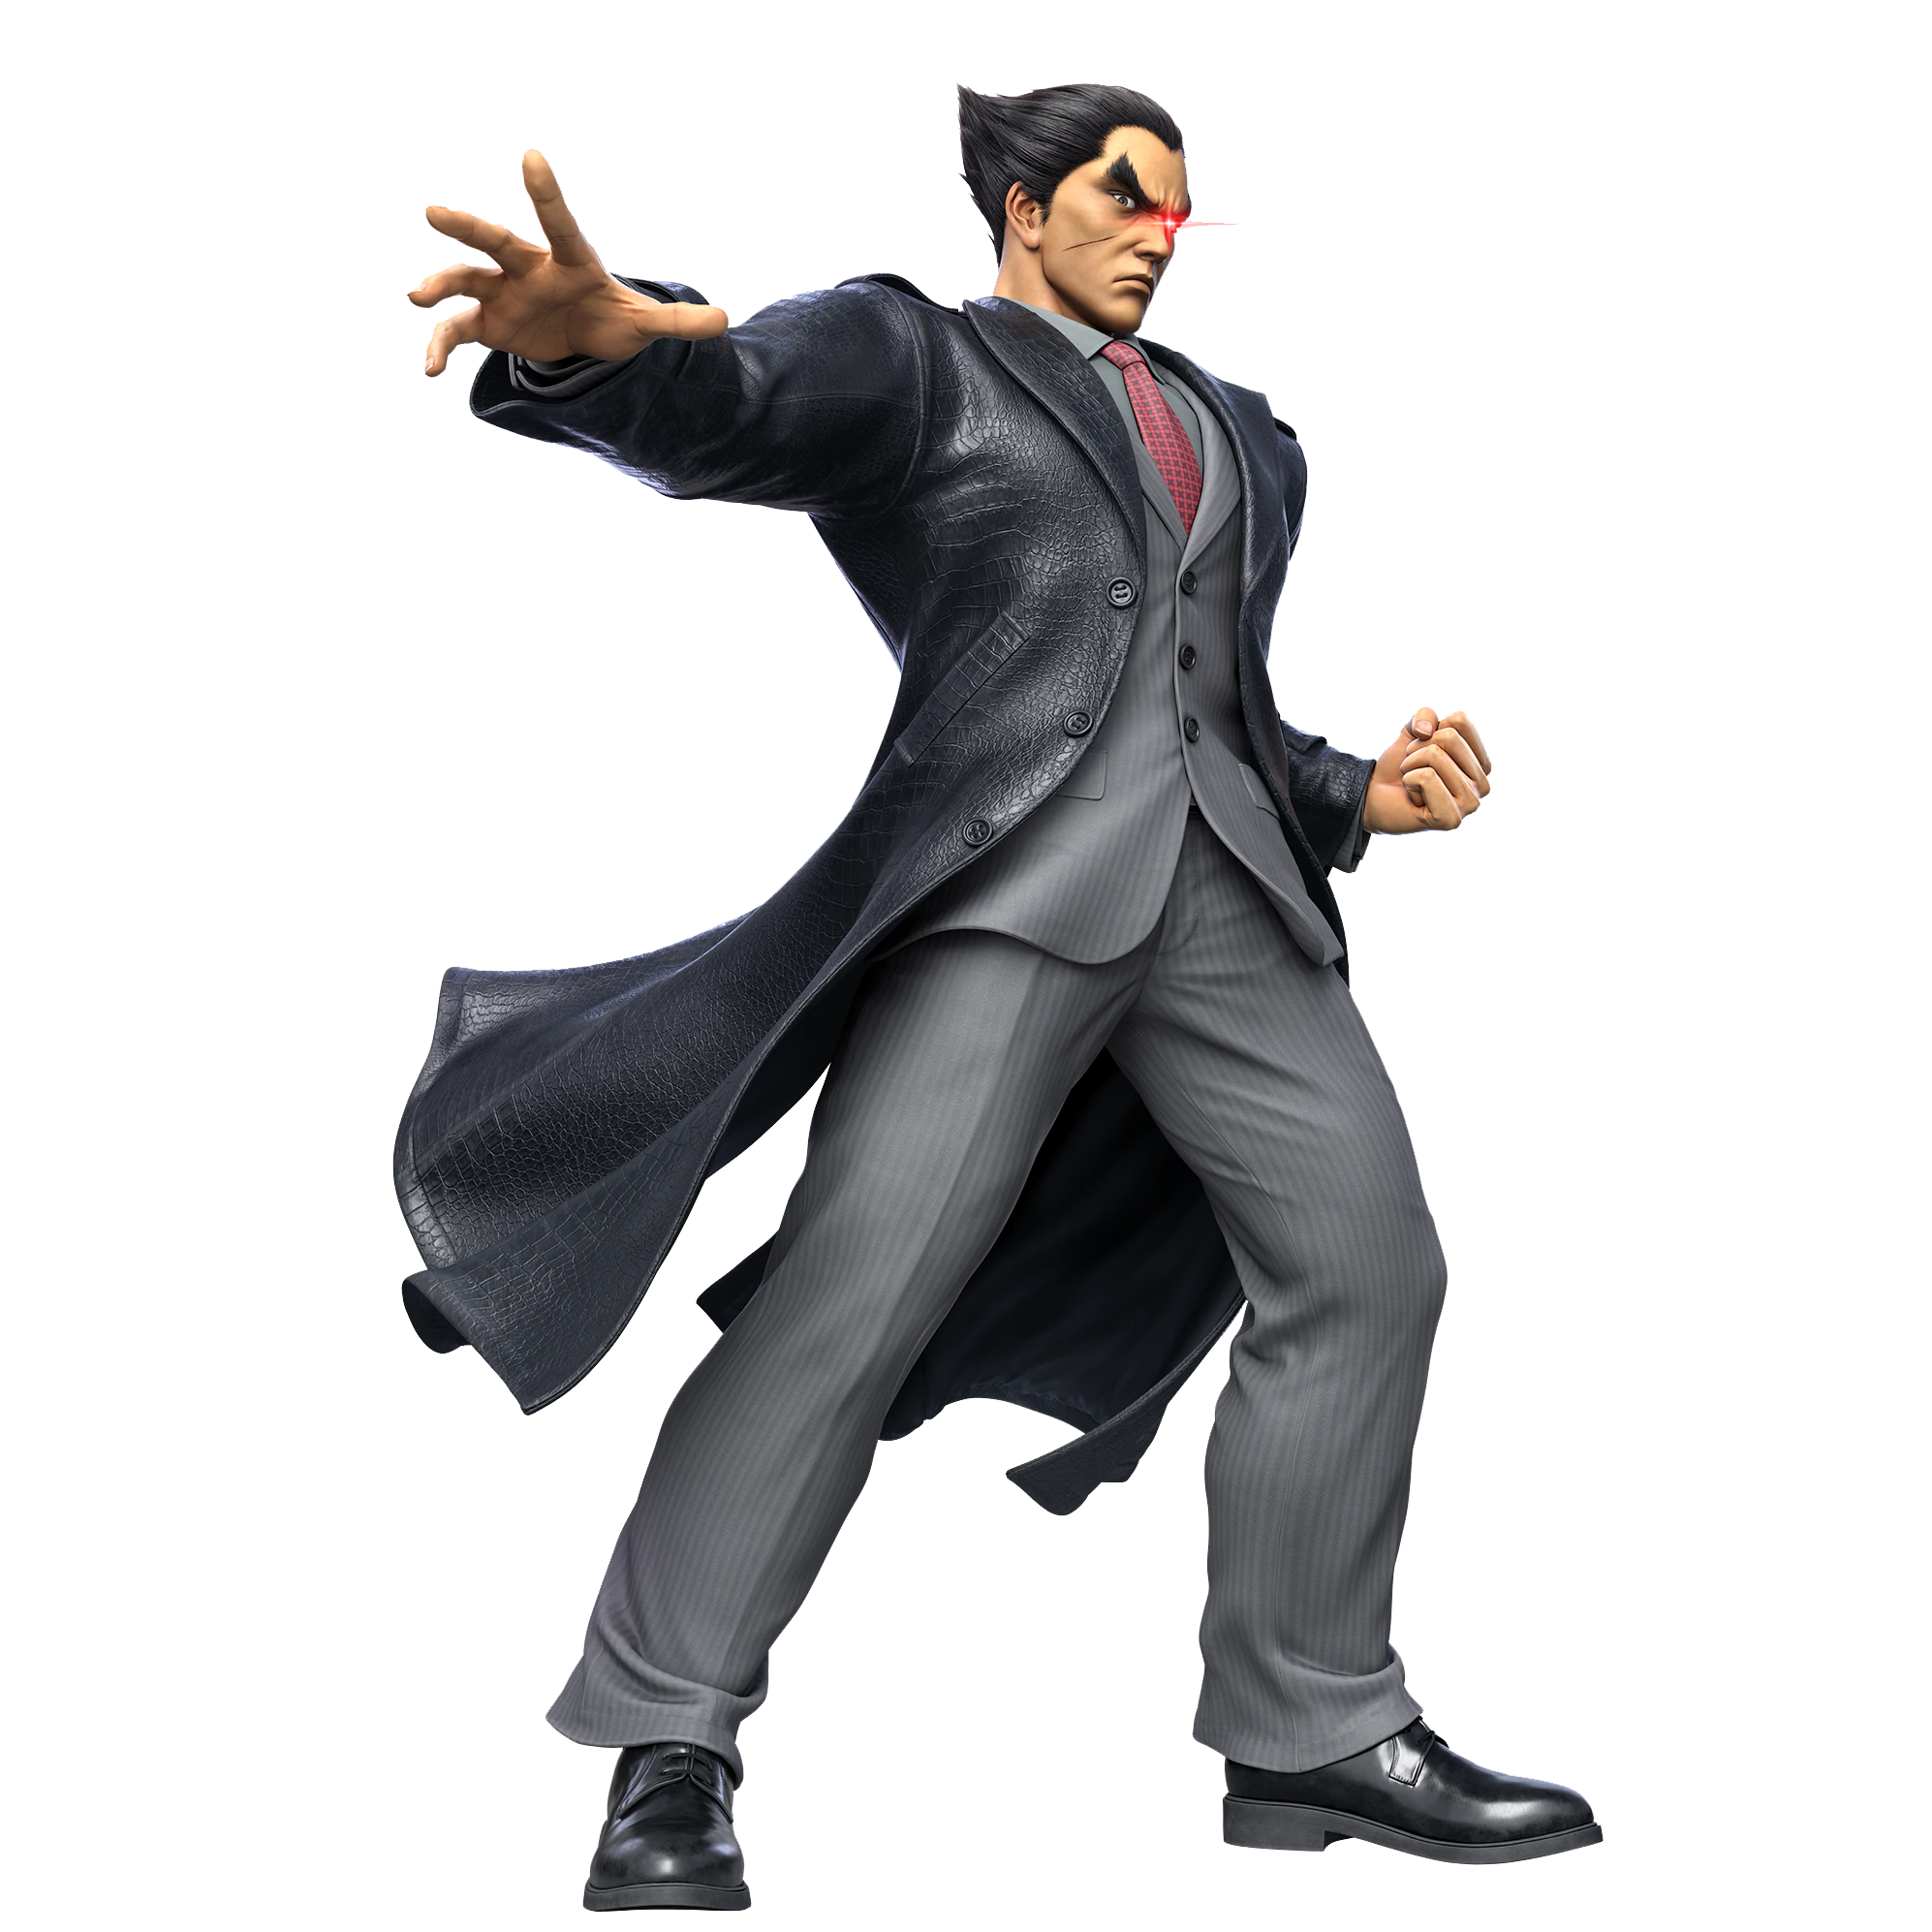 Super Smash Bros. Ultimate DLC character Kazuya Mishima from